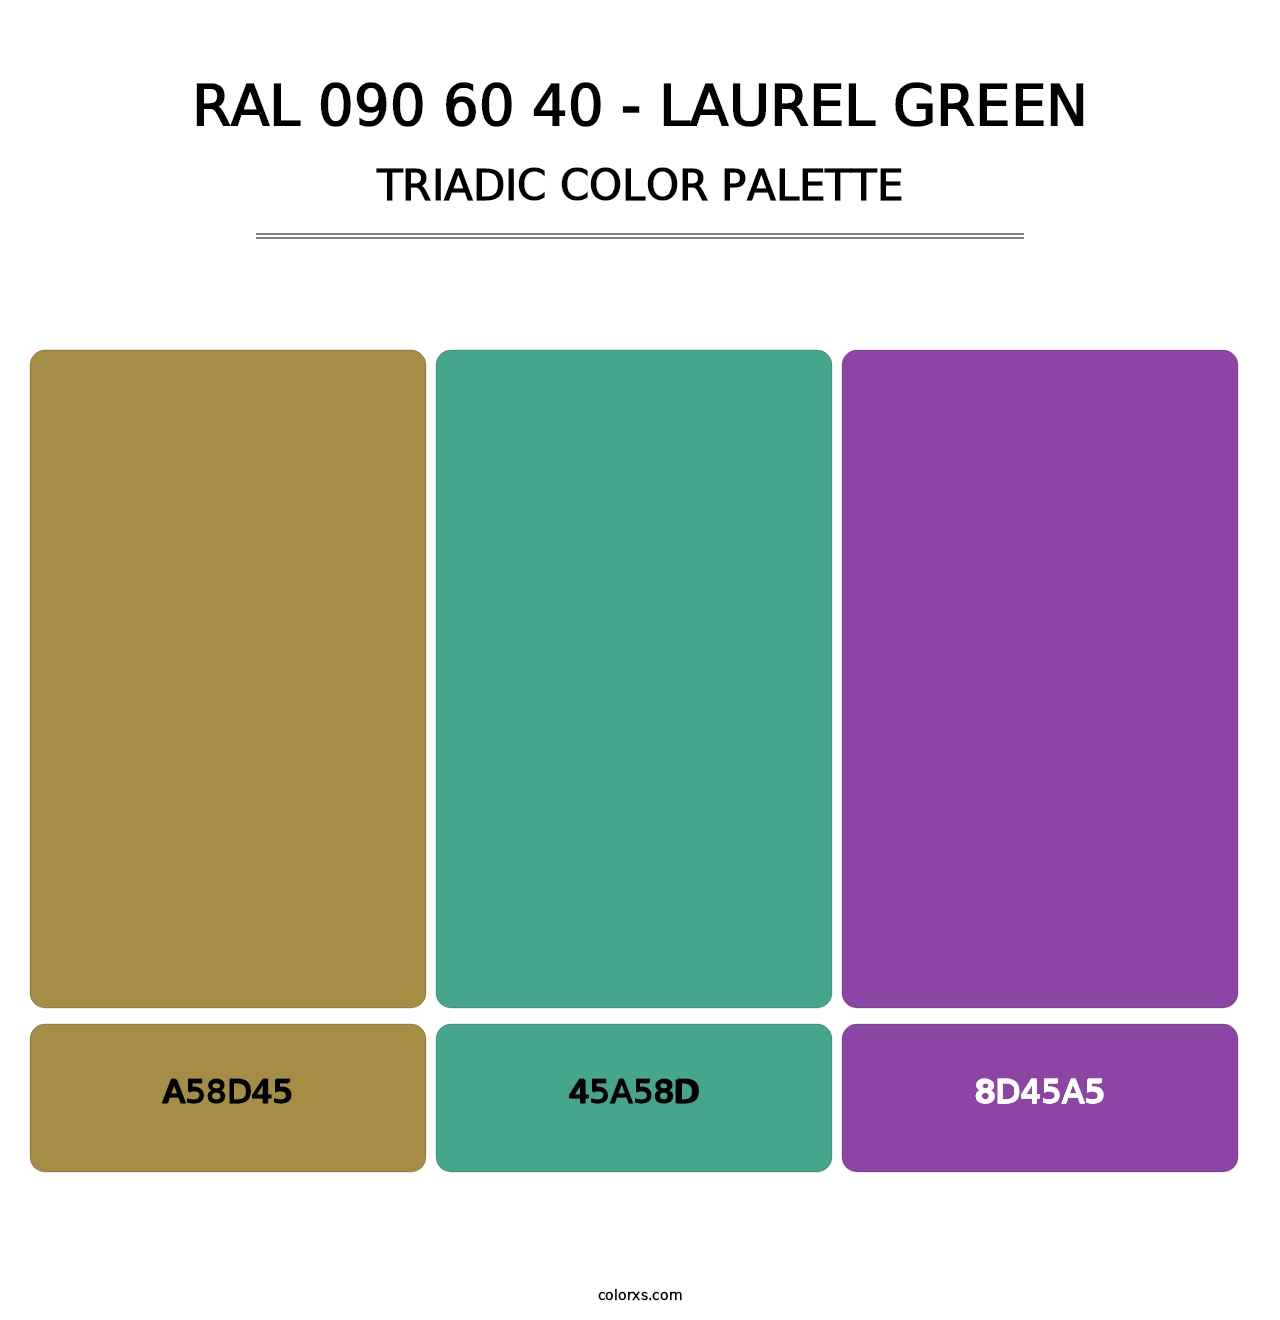 RAL 090 60 40 - Laurel Green - Triadic Color Palette